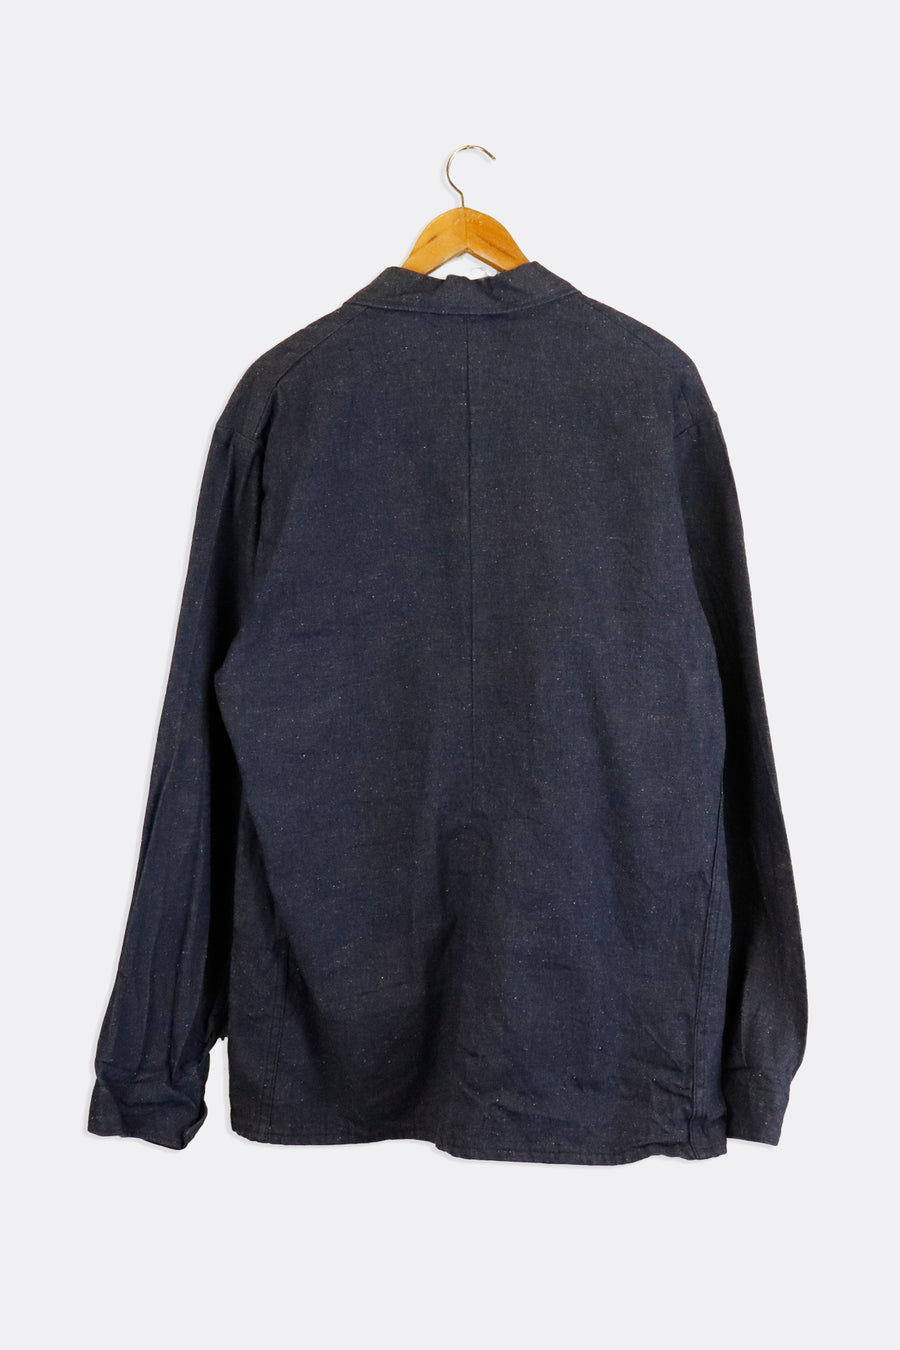 Vintage TTC Embroidered Logo Mechanic Style Denim Jacket Outerwear